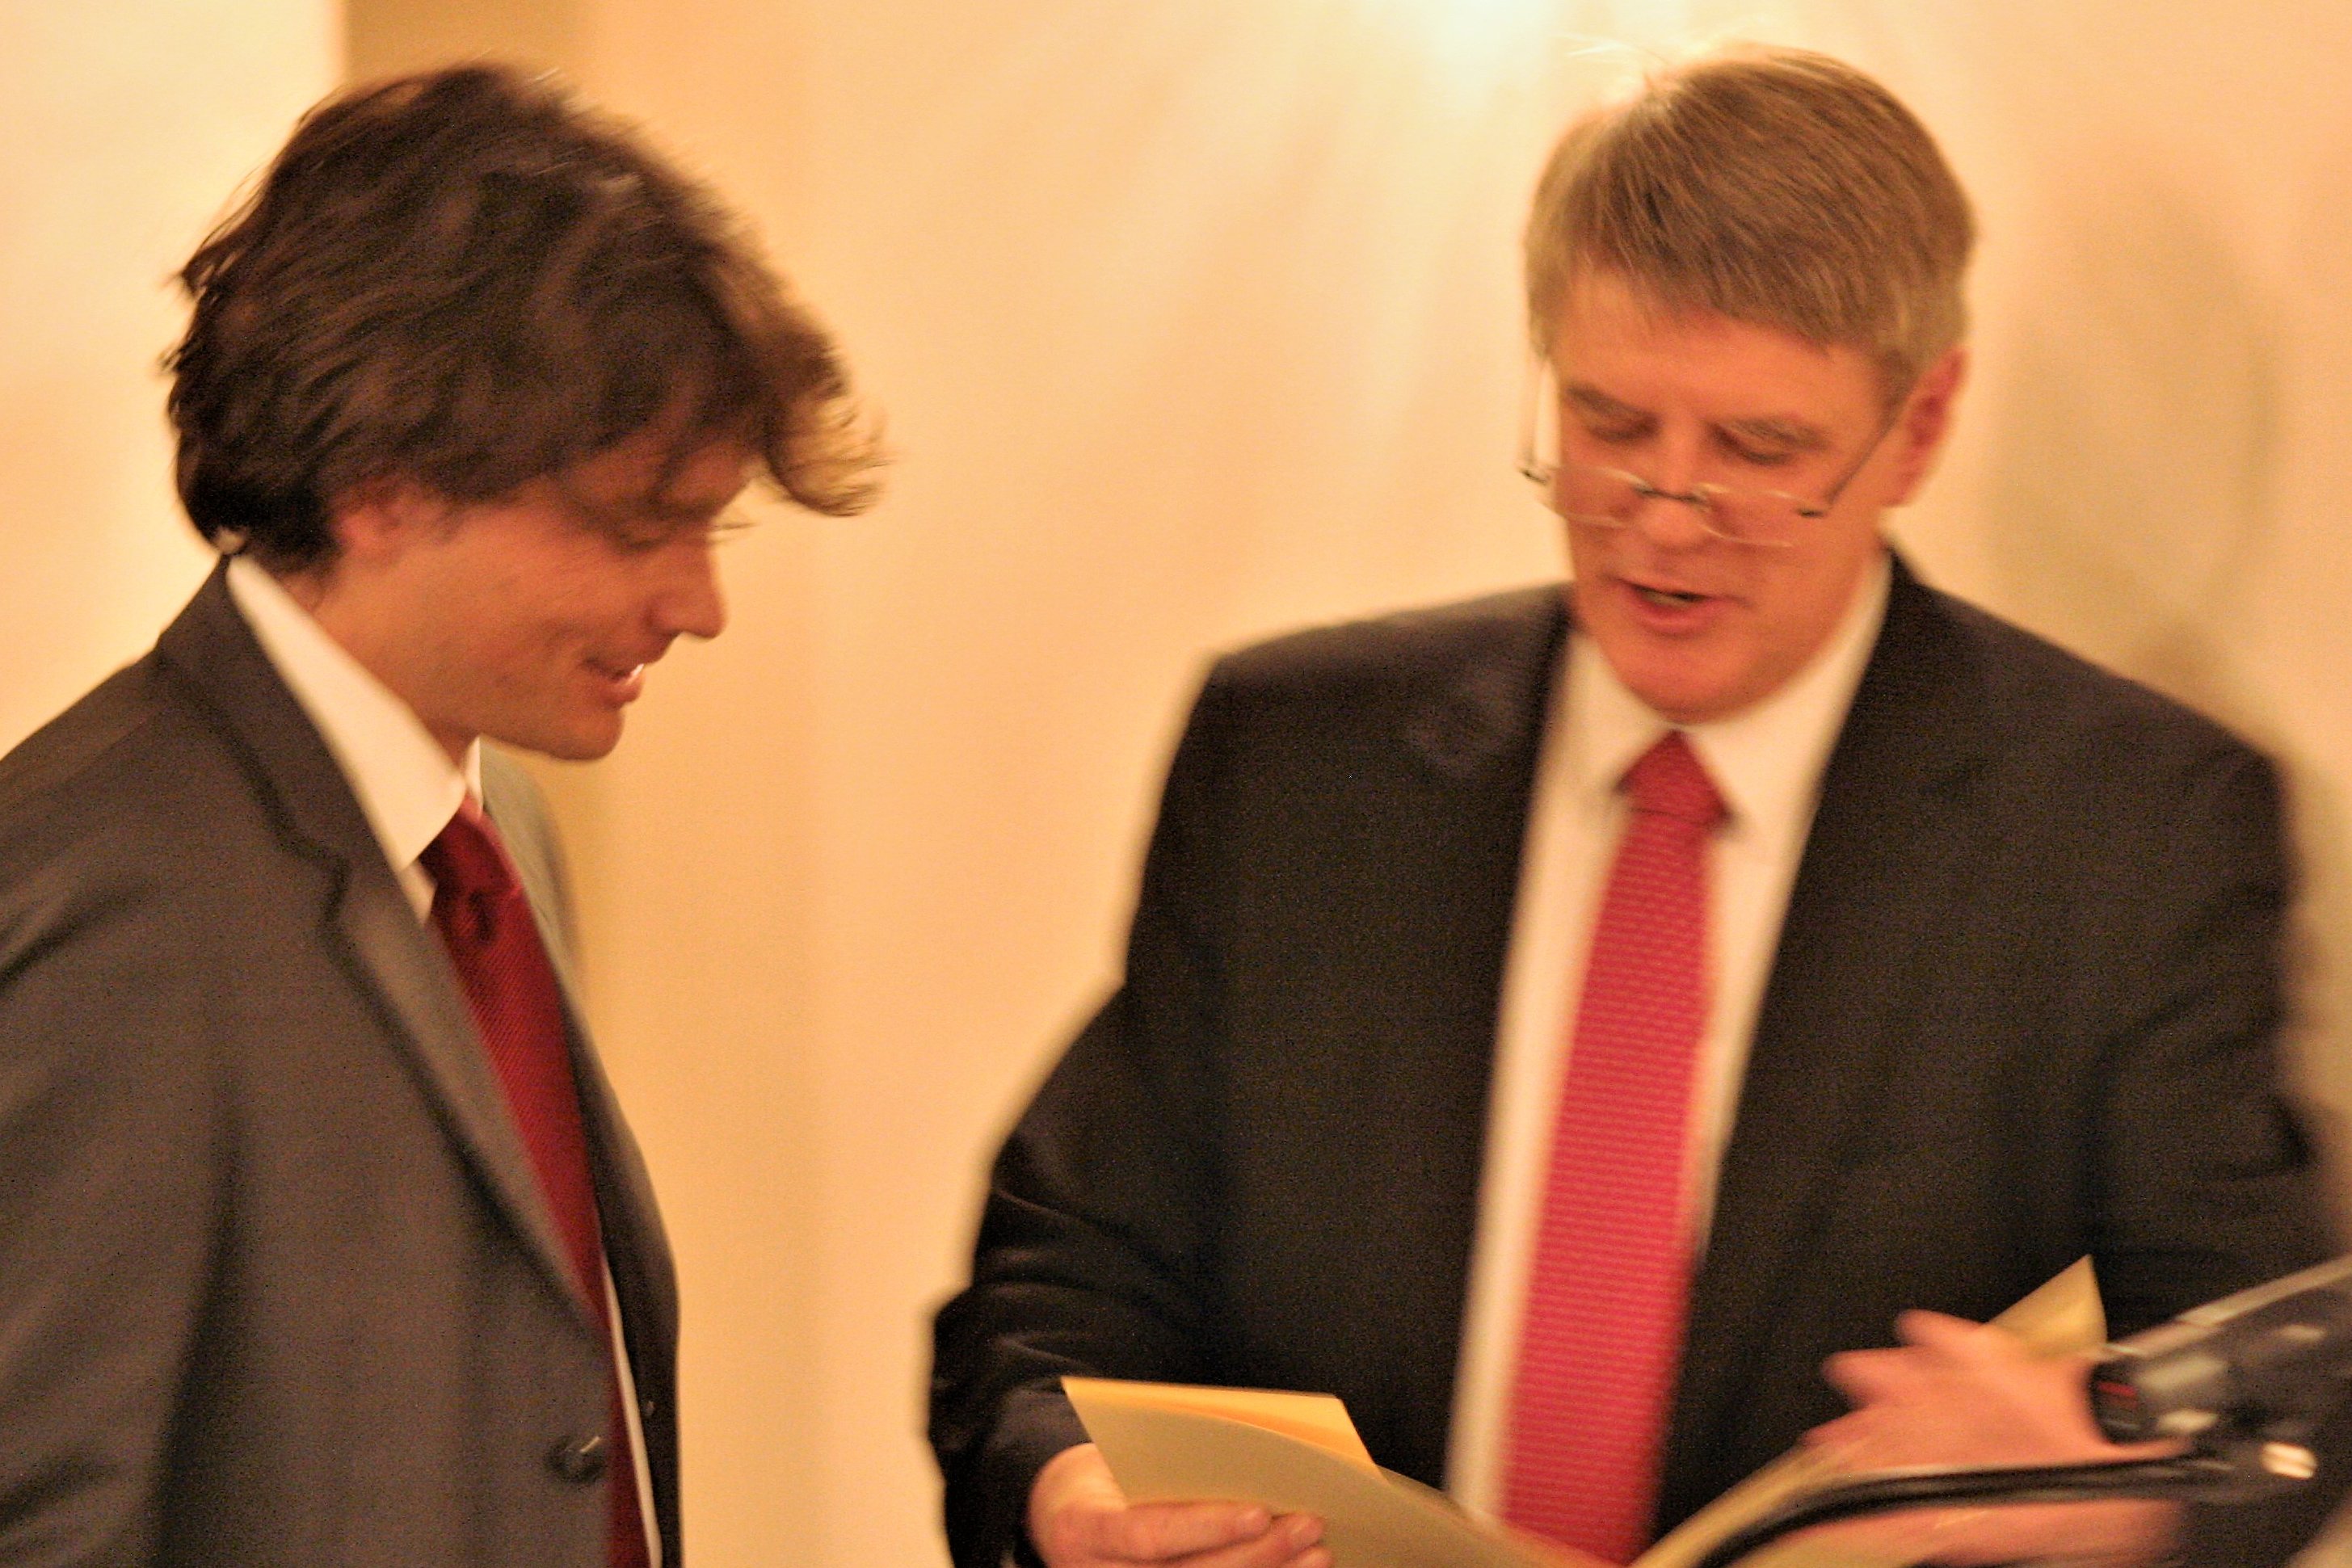 2010 Wolfgang J. Mommsen Prize winner Tobias Wolffhardt being awarded the prize